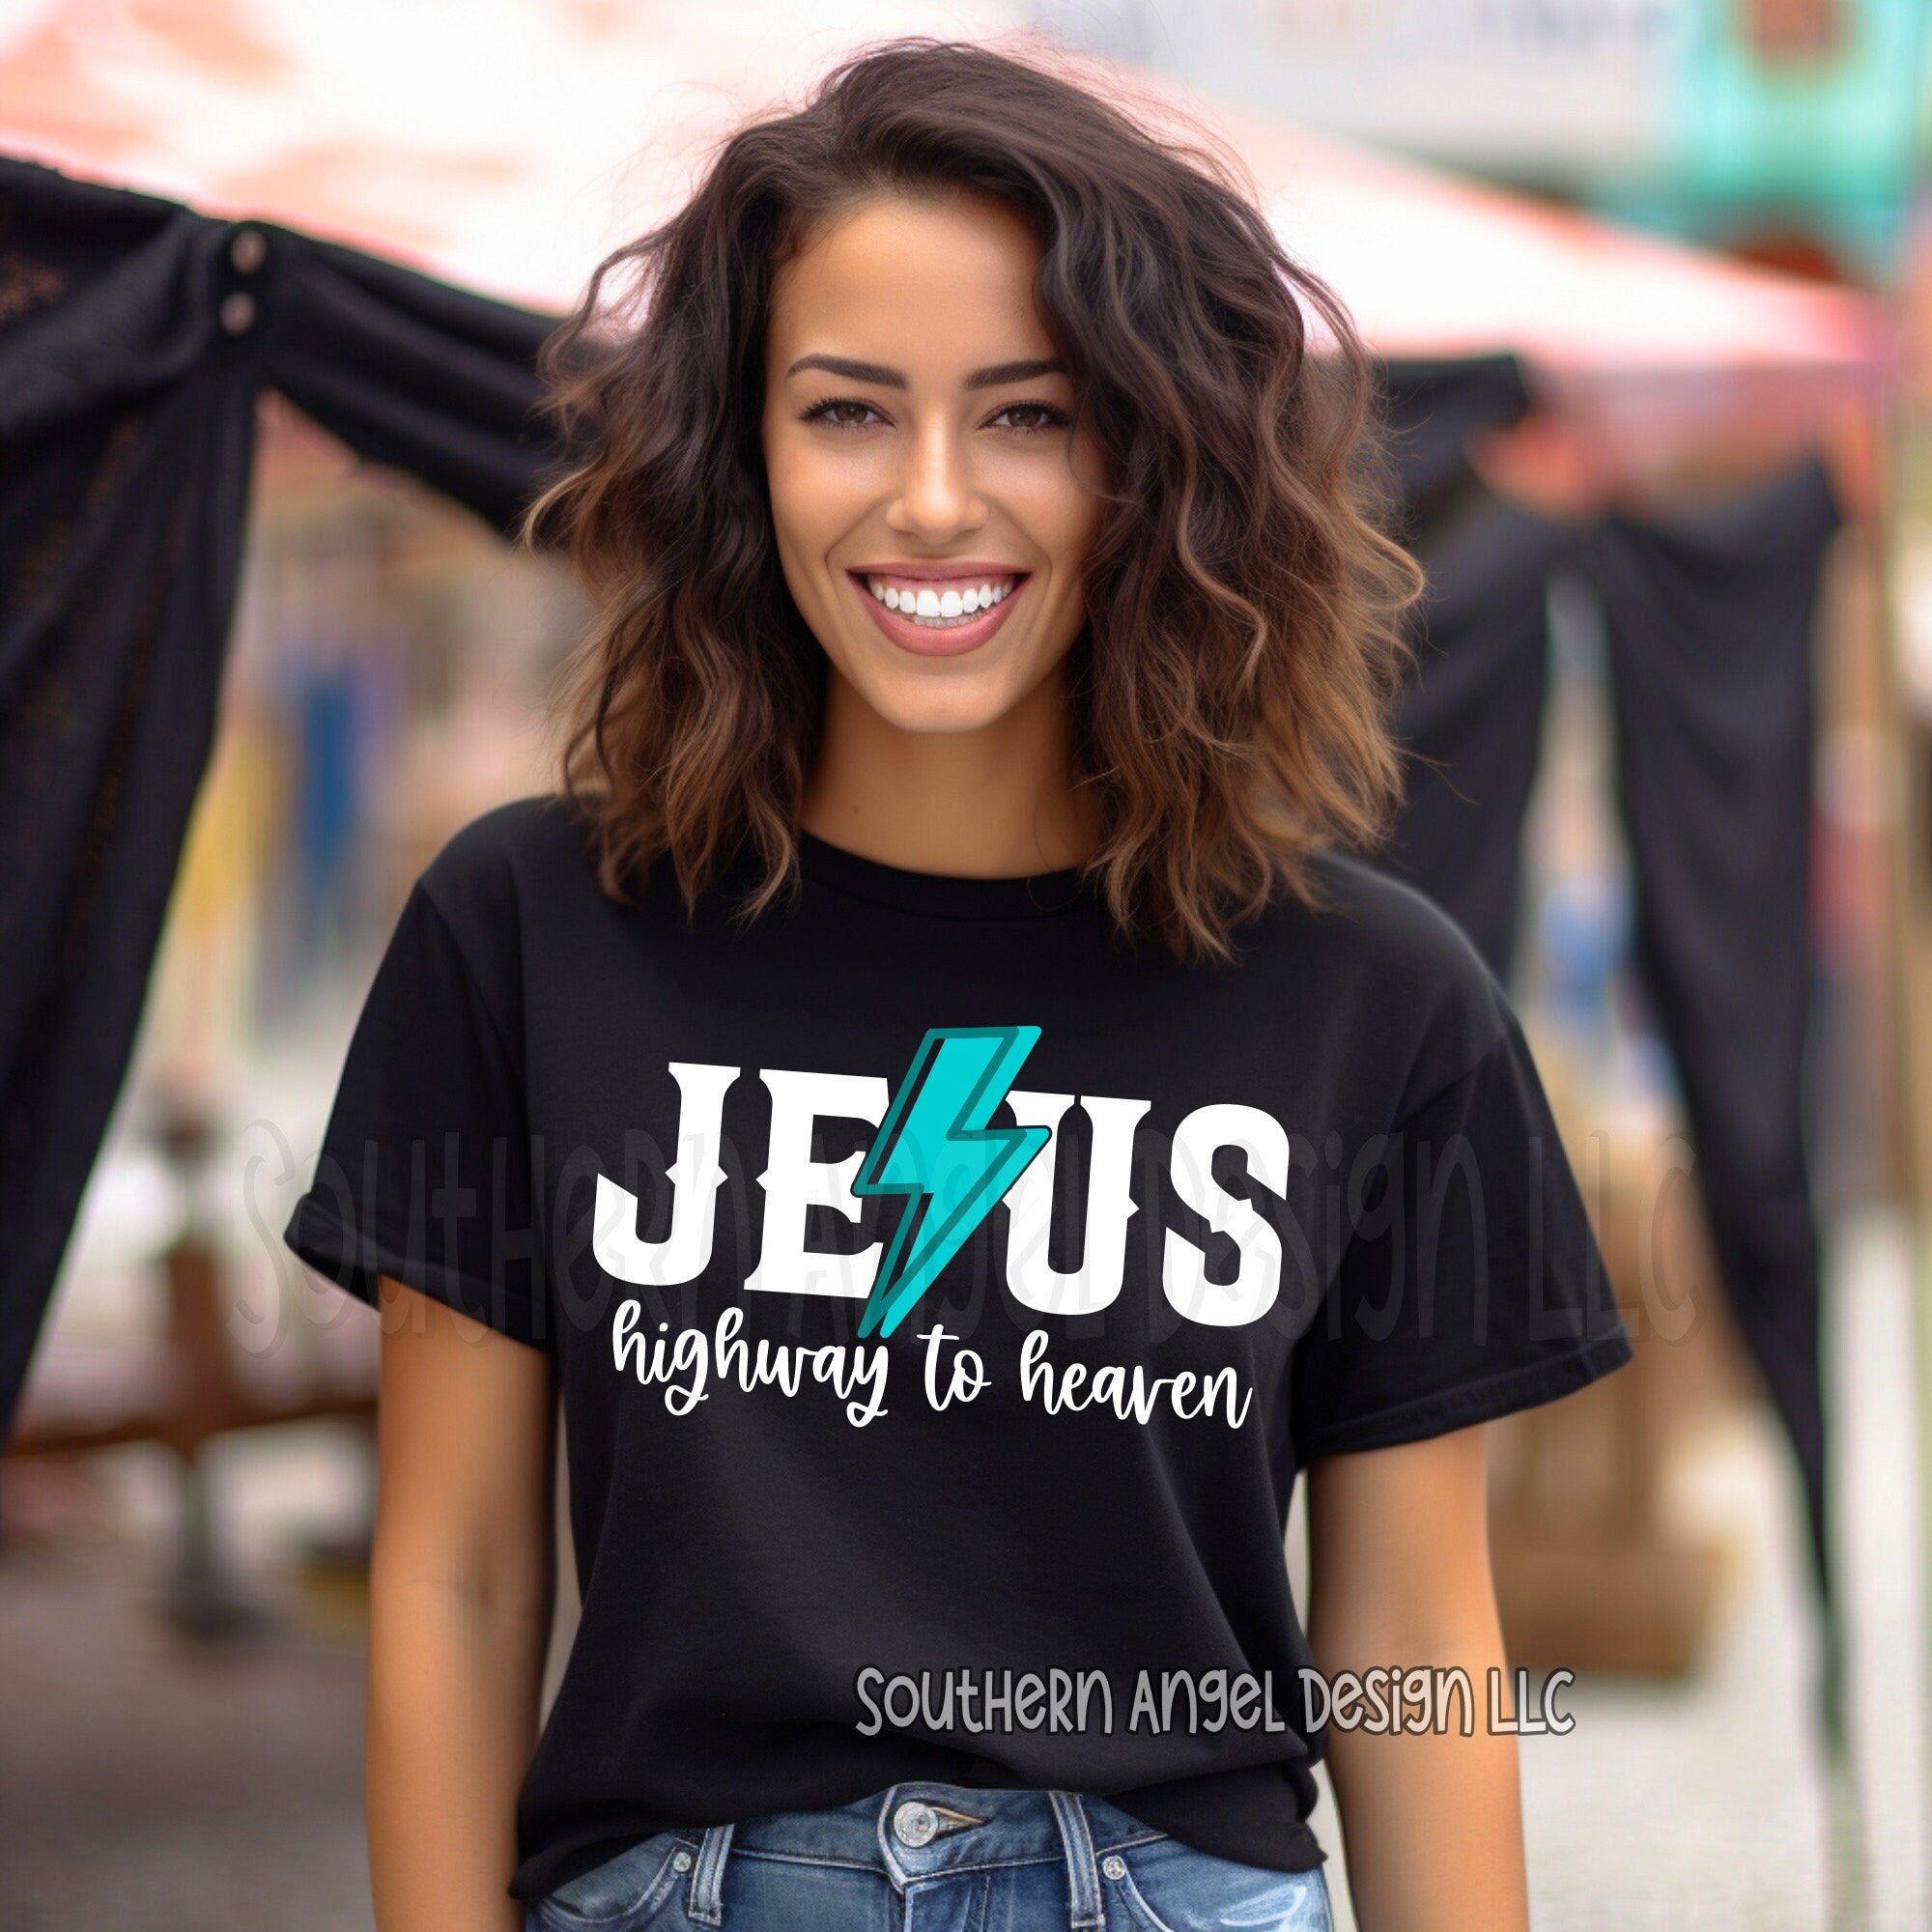 Jesus highway to heaven shirt, John 3:16 shirt, Bible verse shirt, Religious shirt, Leave the judging to Jesus, Love like Jesus, Positive